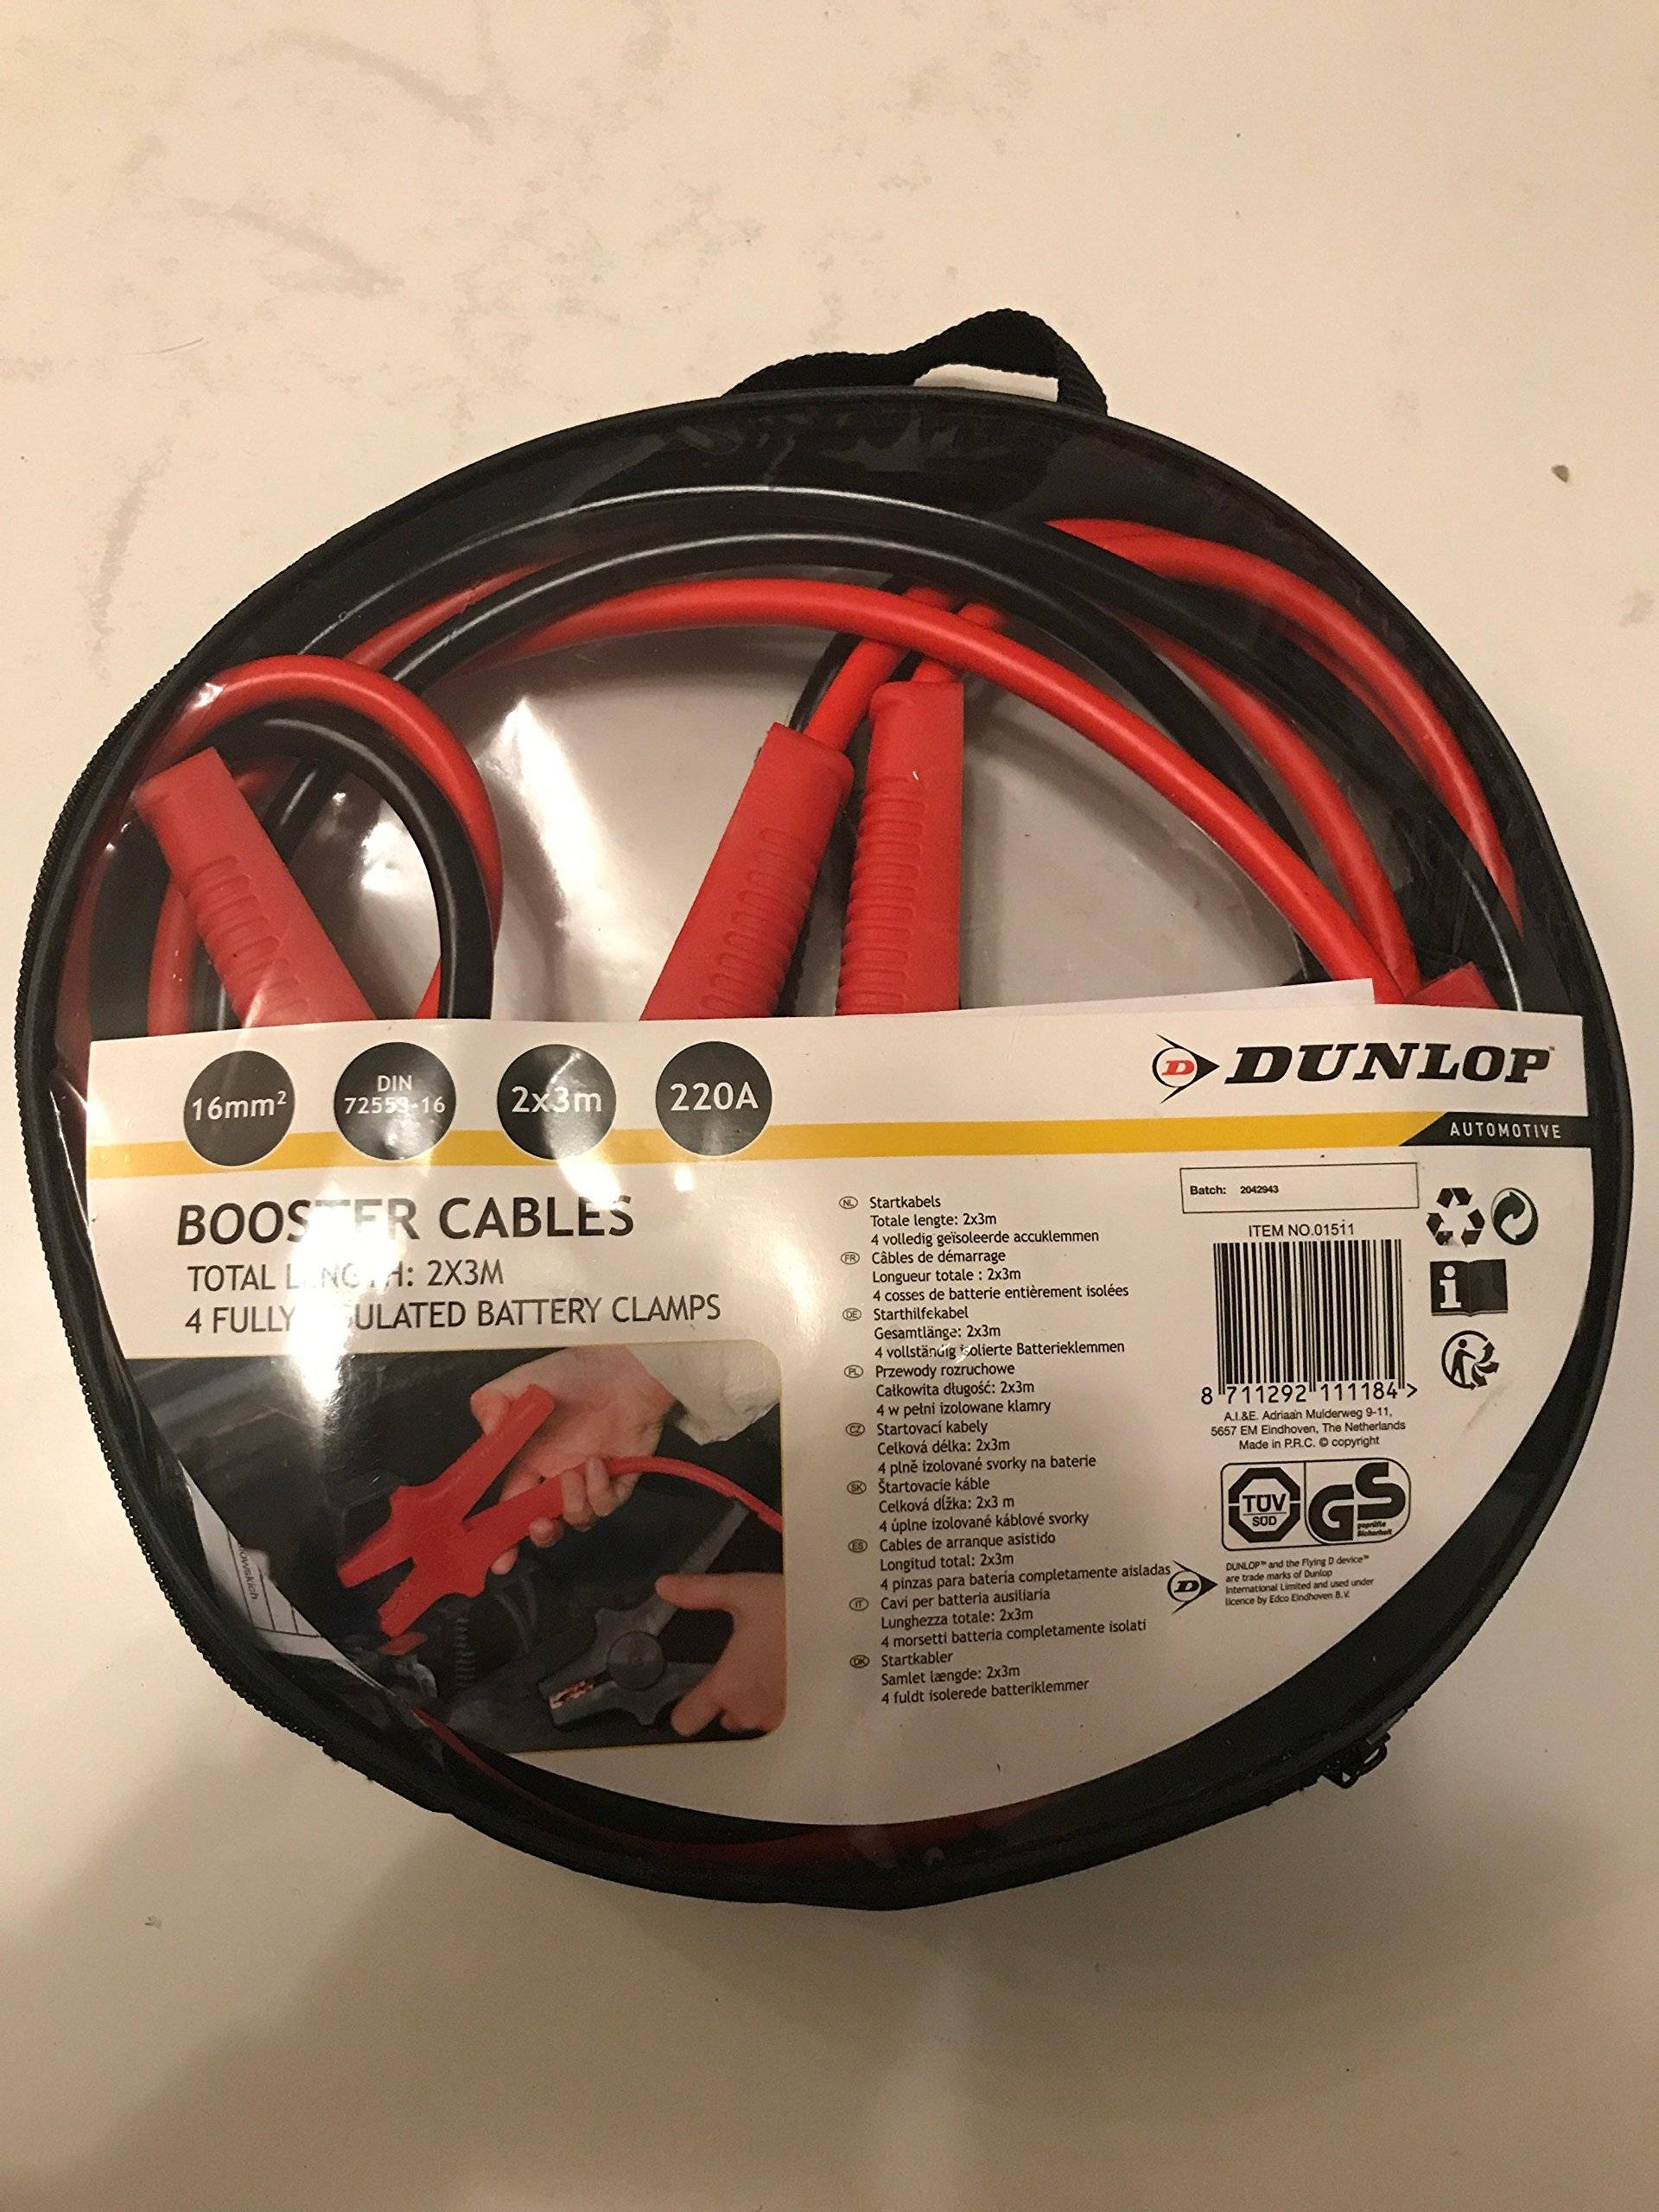 Dunlop Automotive Startkabel Booster Cables 2x3m von Dunlop Automotive